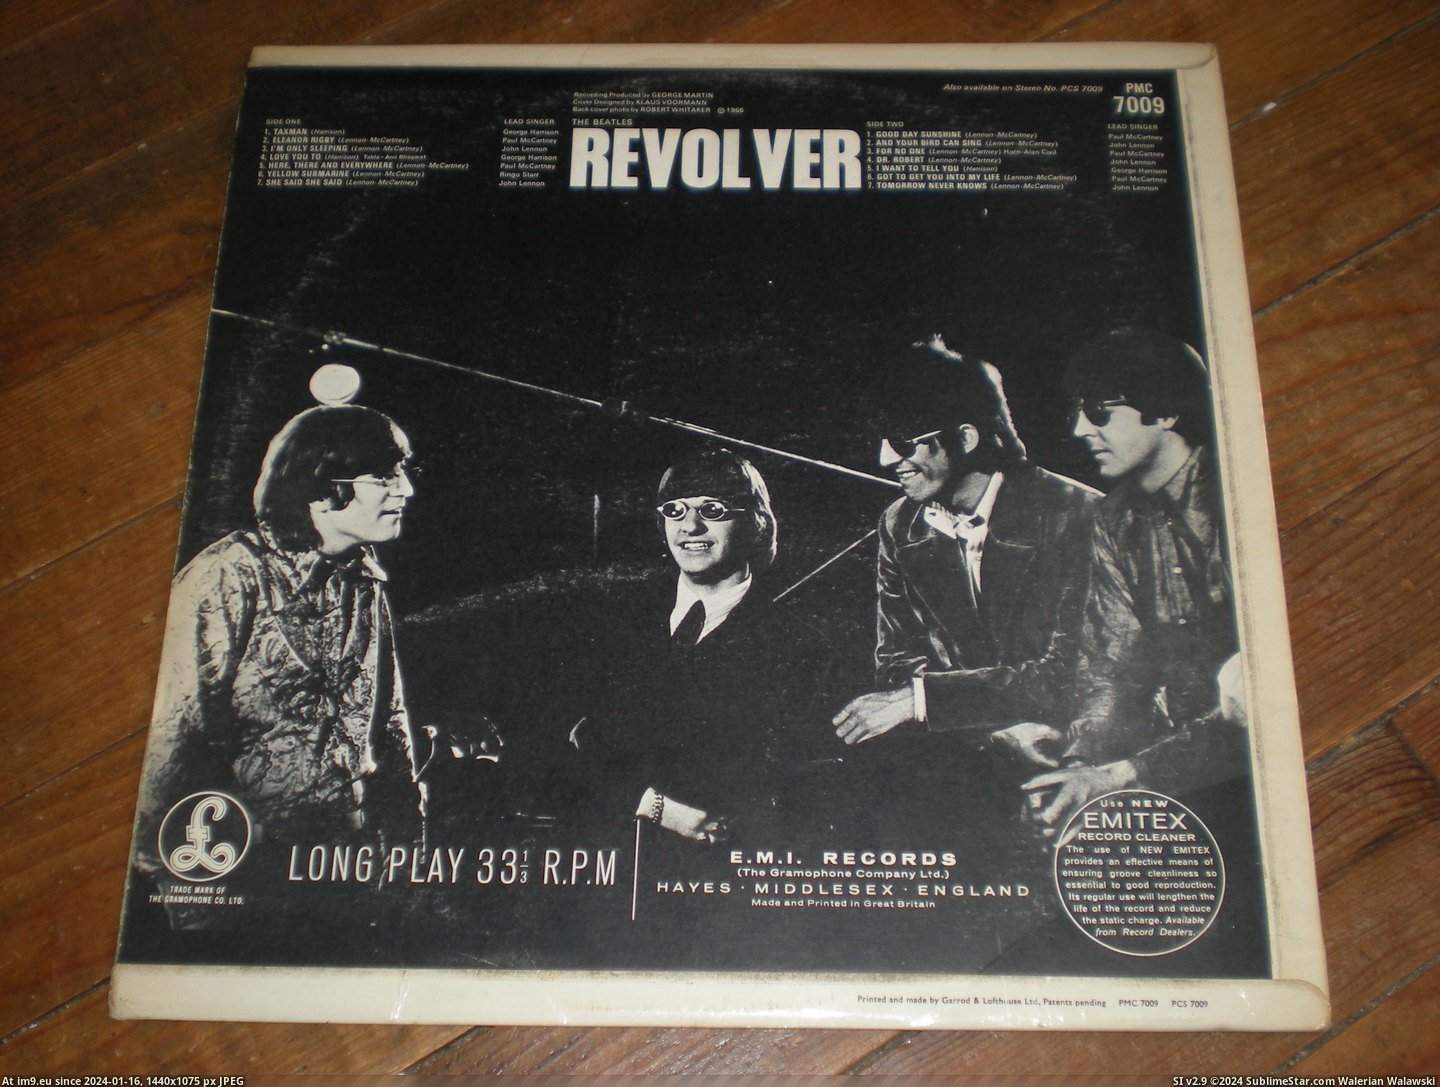  #Revolver  Revolver 15-07-14 3 Pic. (Изображение из альбом new 1))